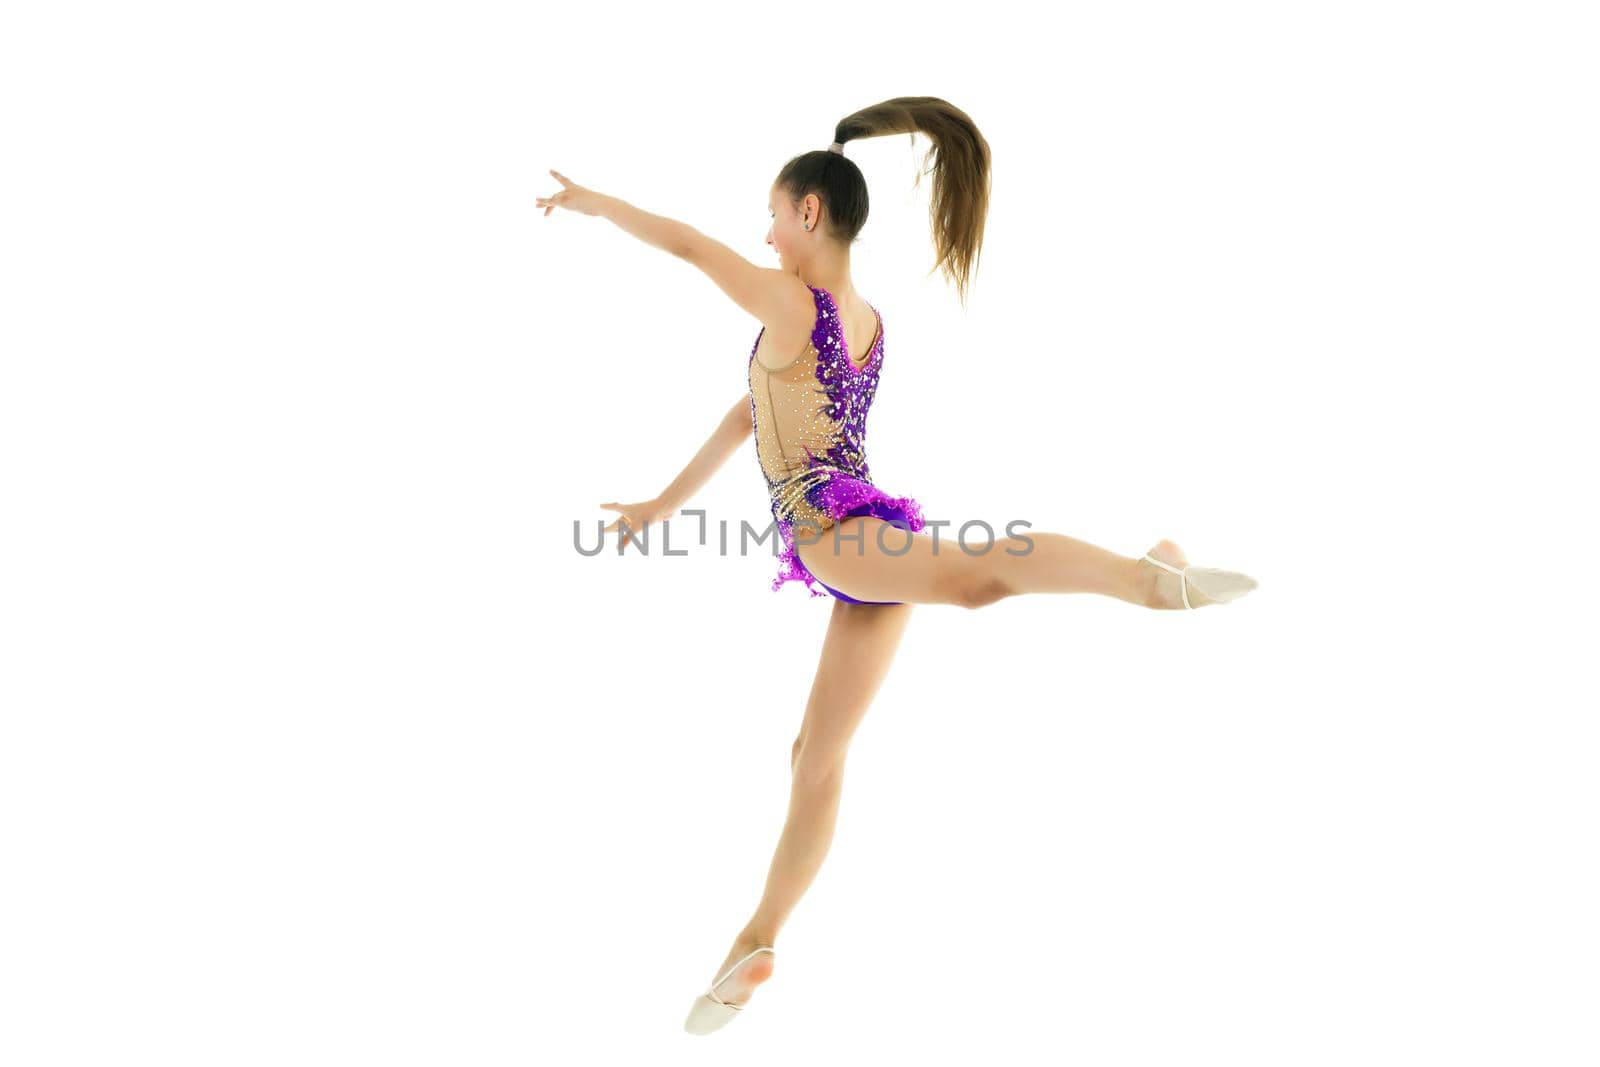 The gymnast perform an acrobatic element. by kolesnikov_studio